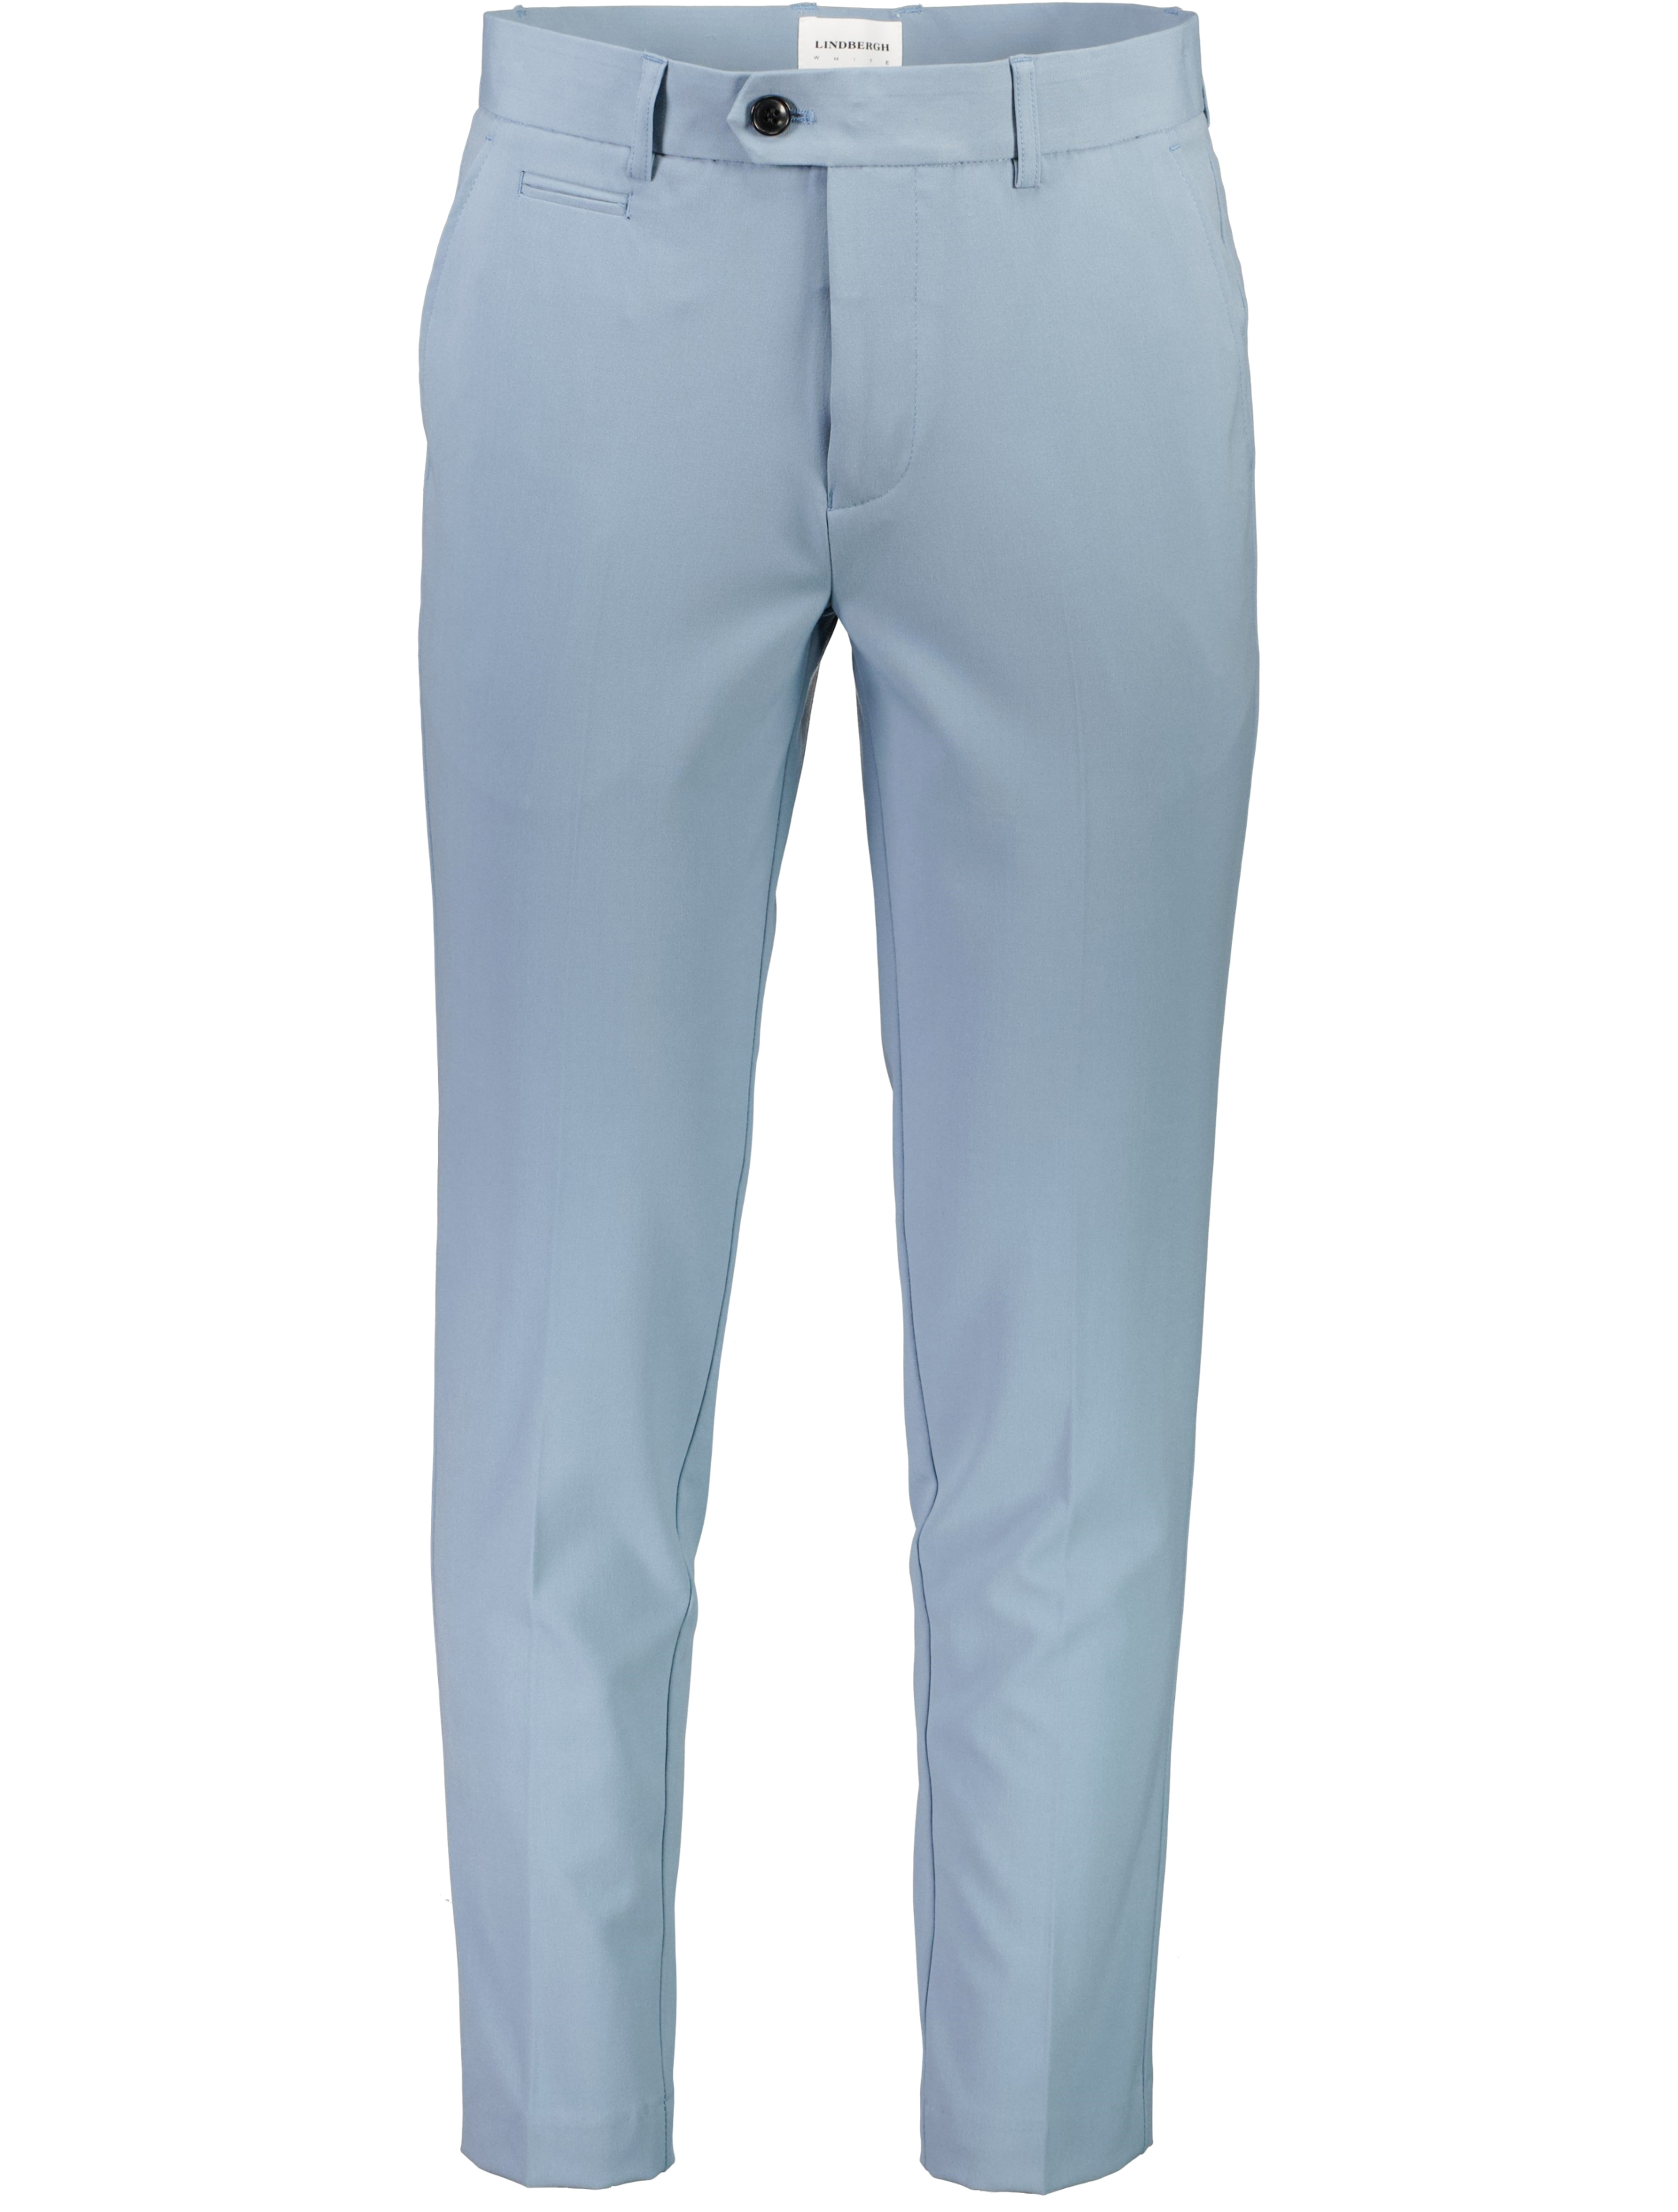 Lindbergh Performance pants blå / dusty blue mel